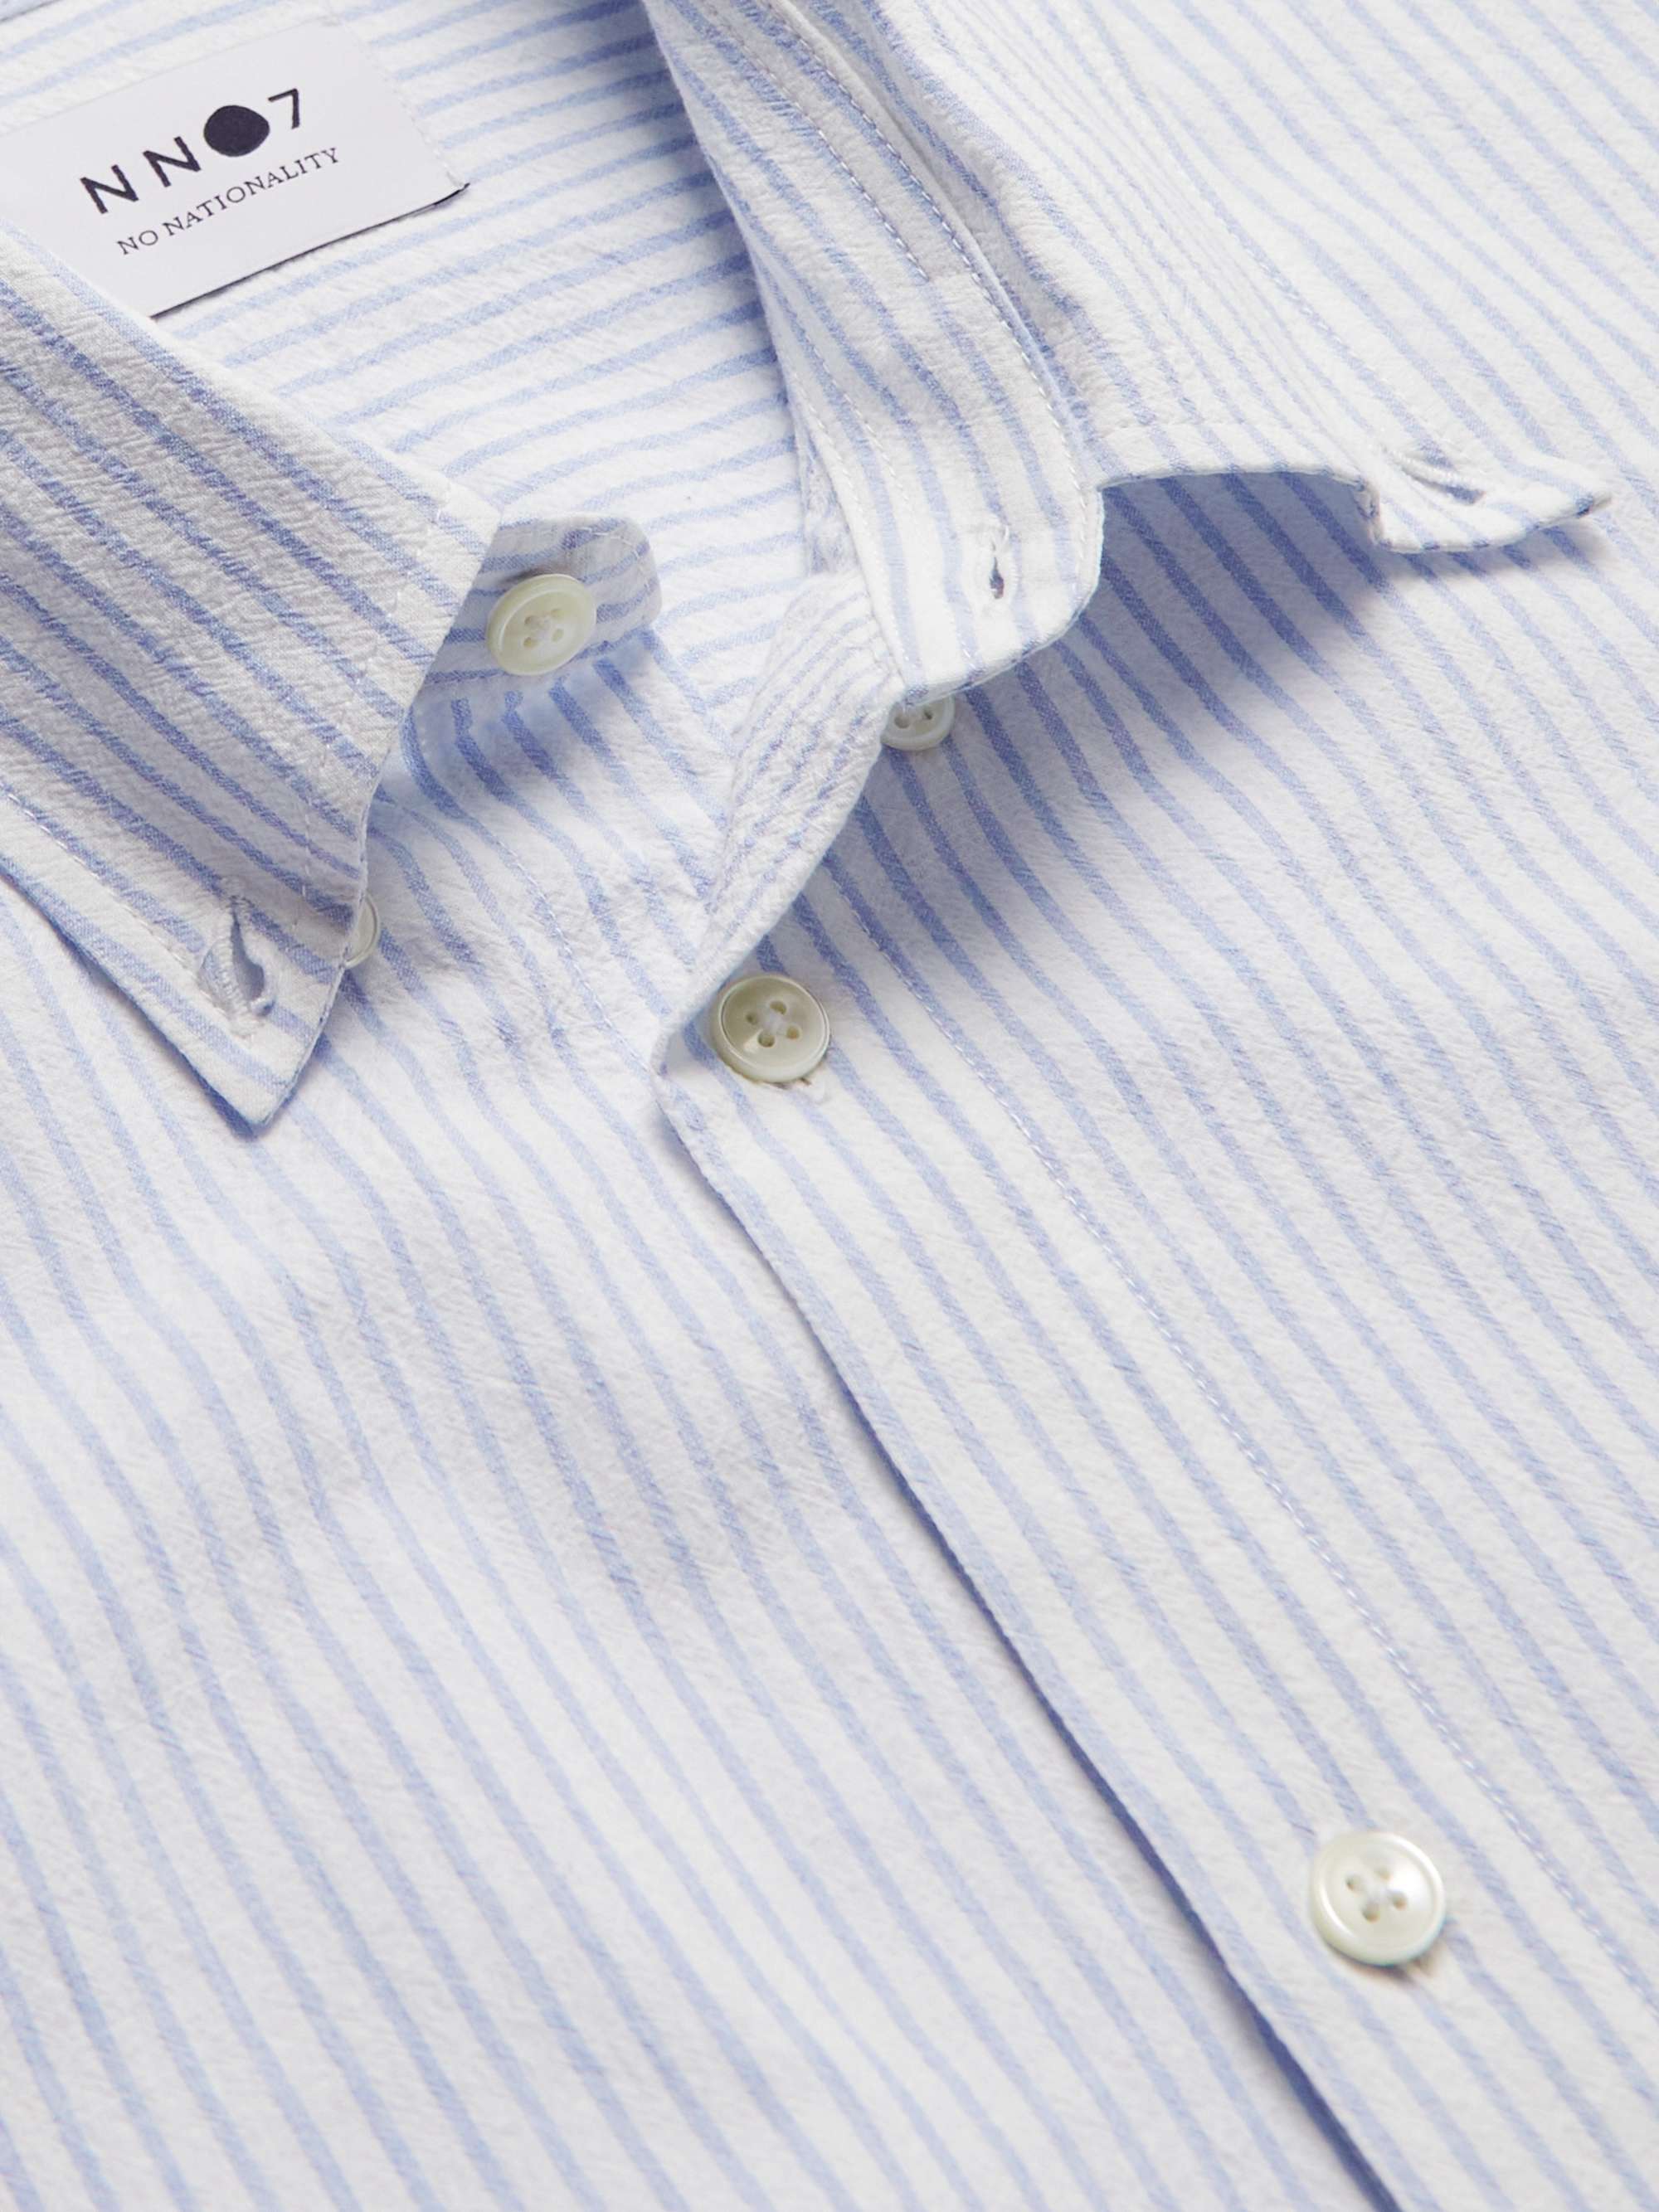 NN07 Arne Button-Down Collar Striped Cotton Shirt